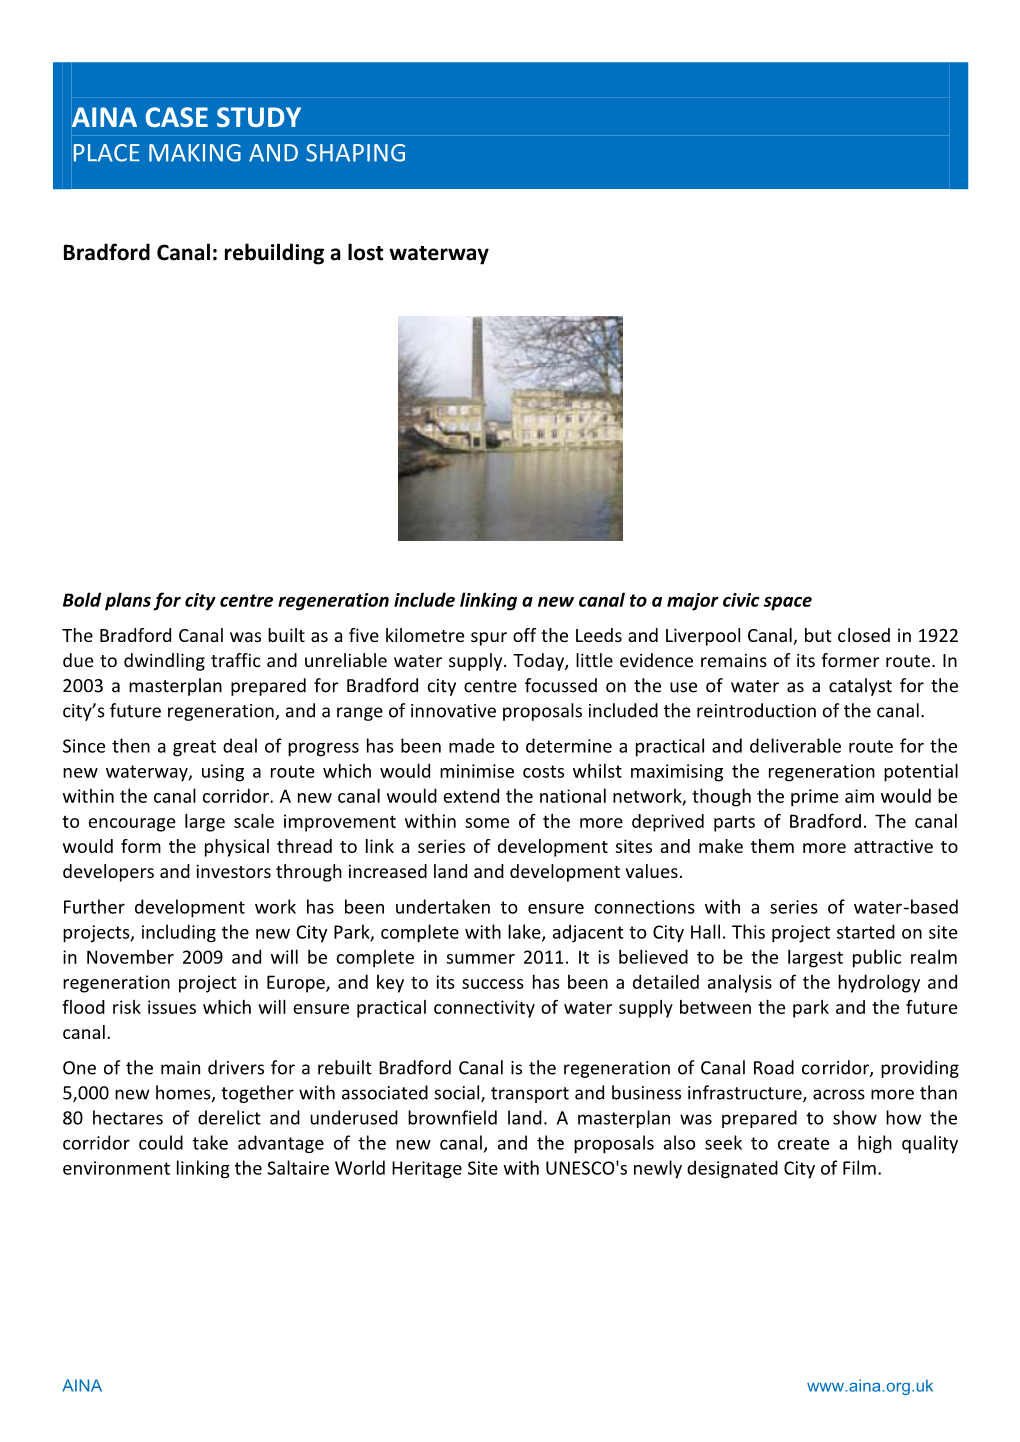 Bradford Canal: Rebuilding a Lost Waterway